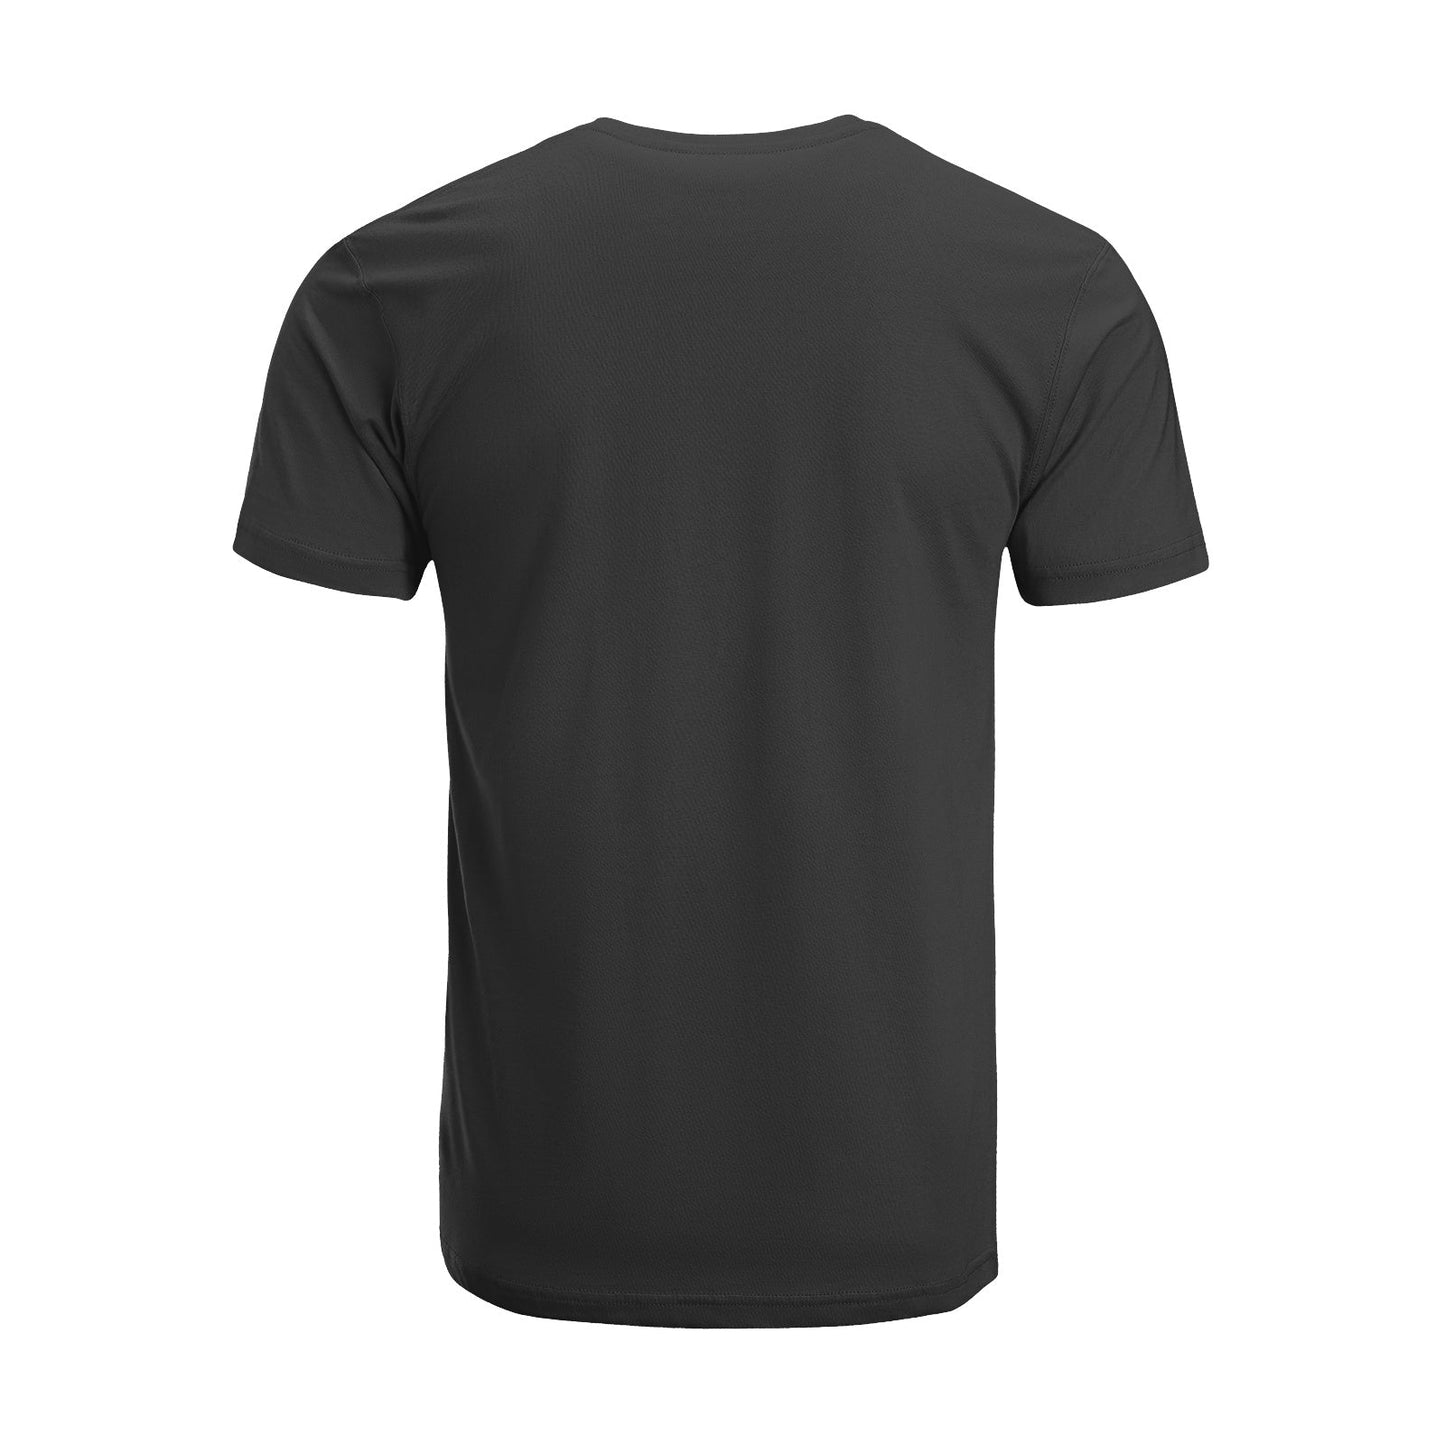 Unisex Short Sleeve Crew Neck Cotton Jersey T-Shirt DOG 48